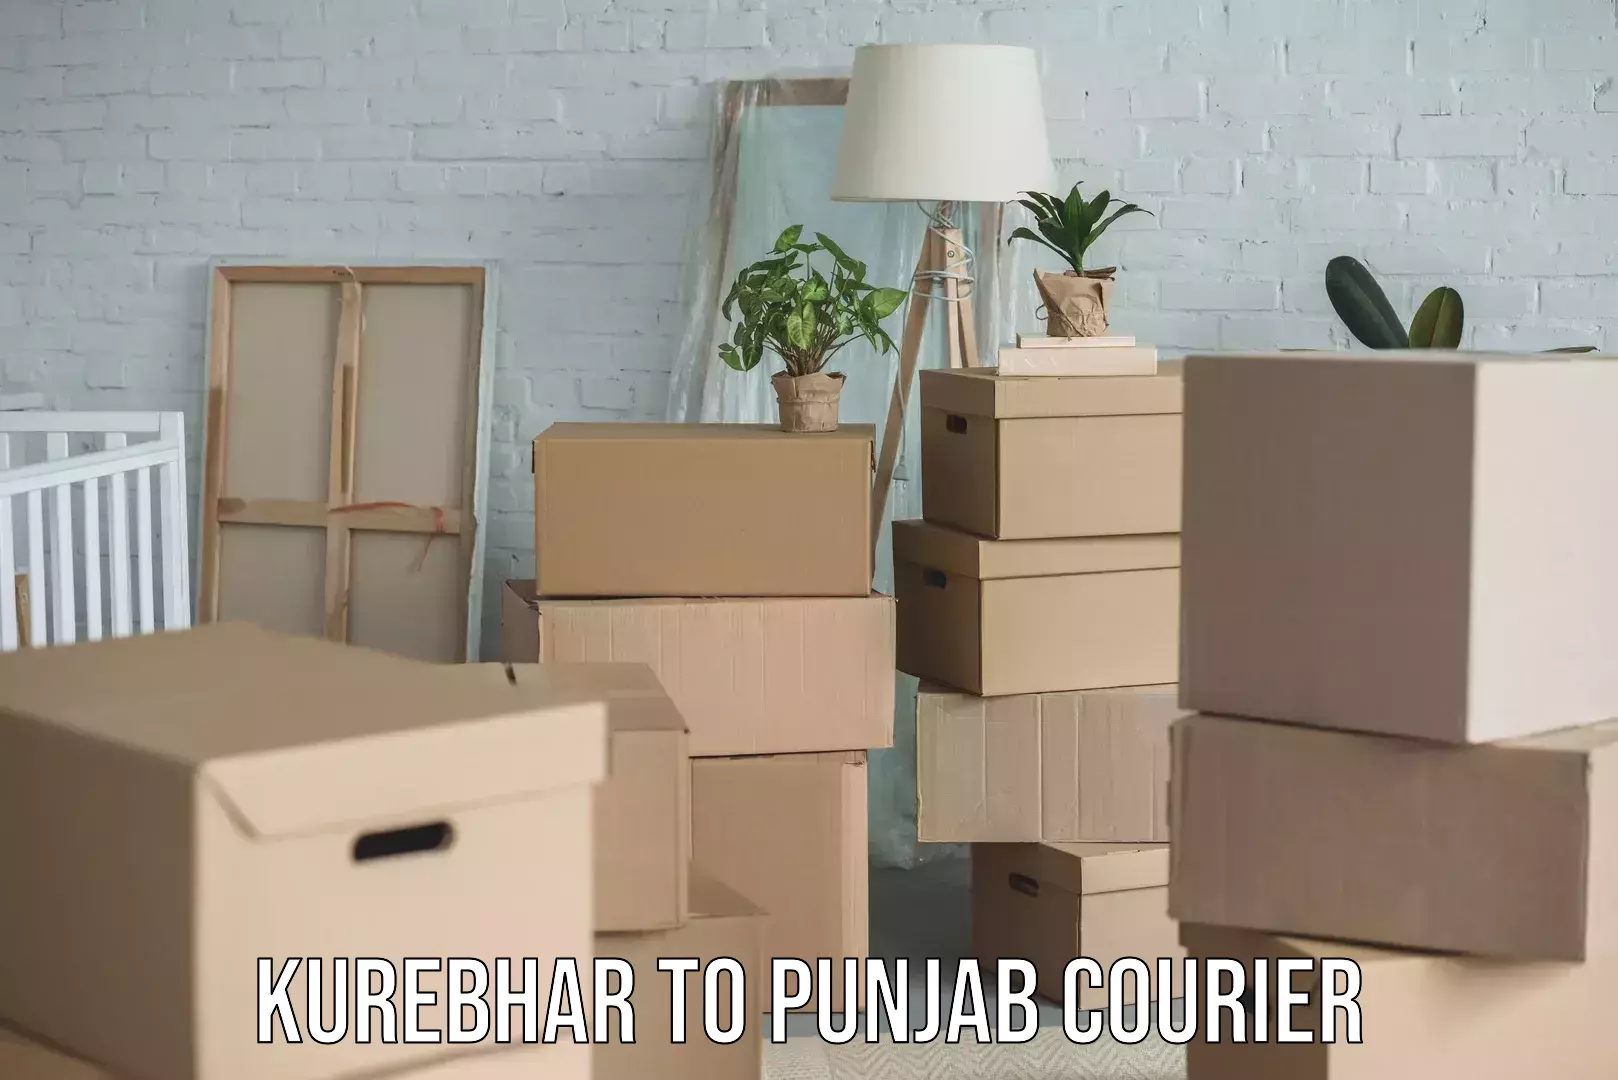 Professional moving assistance Kurebhar to Punjab